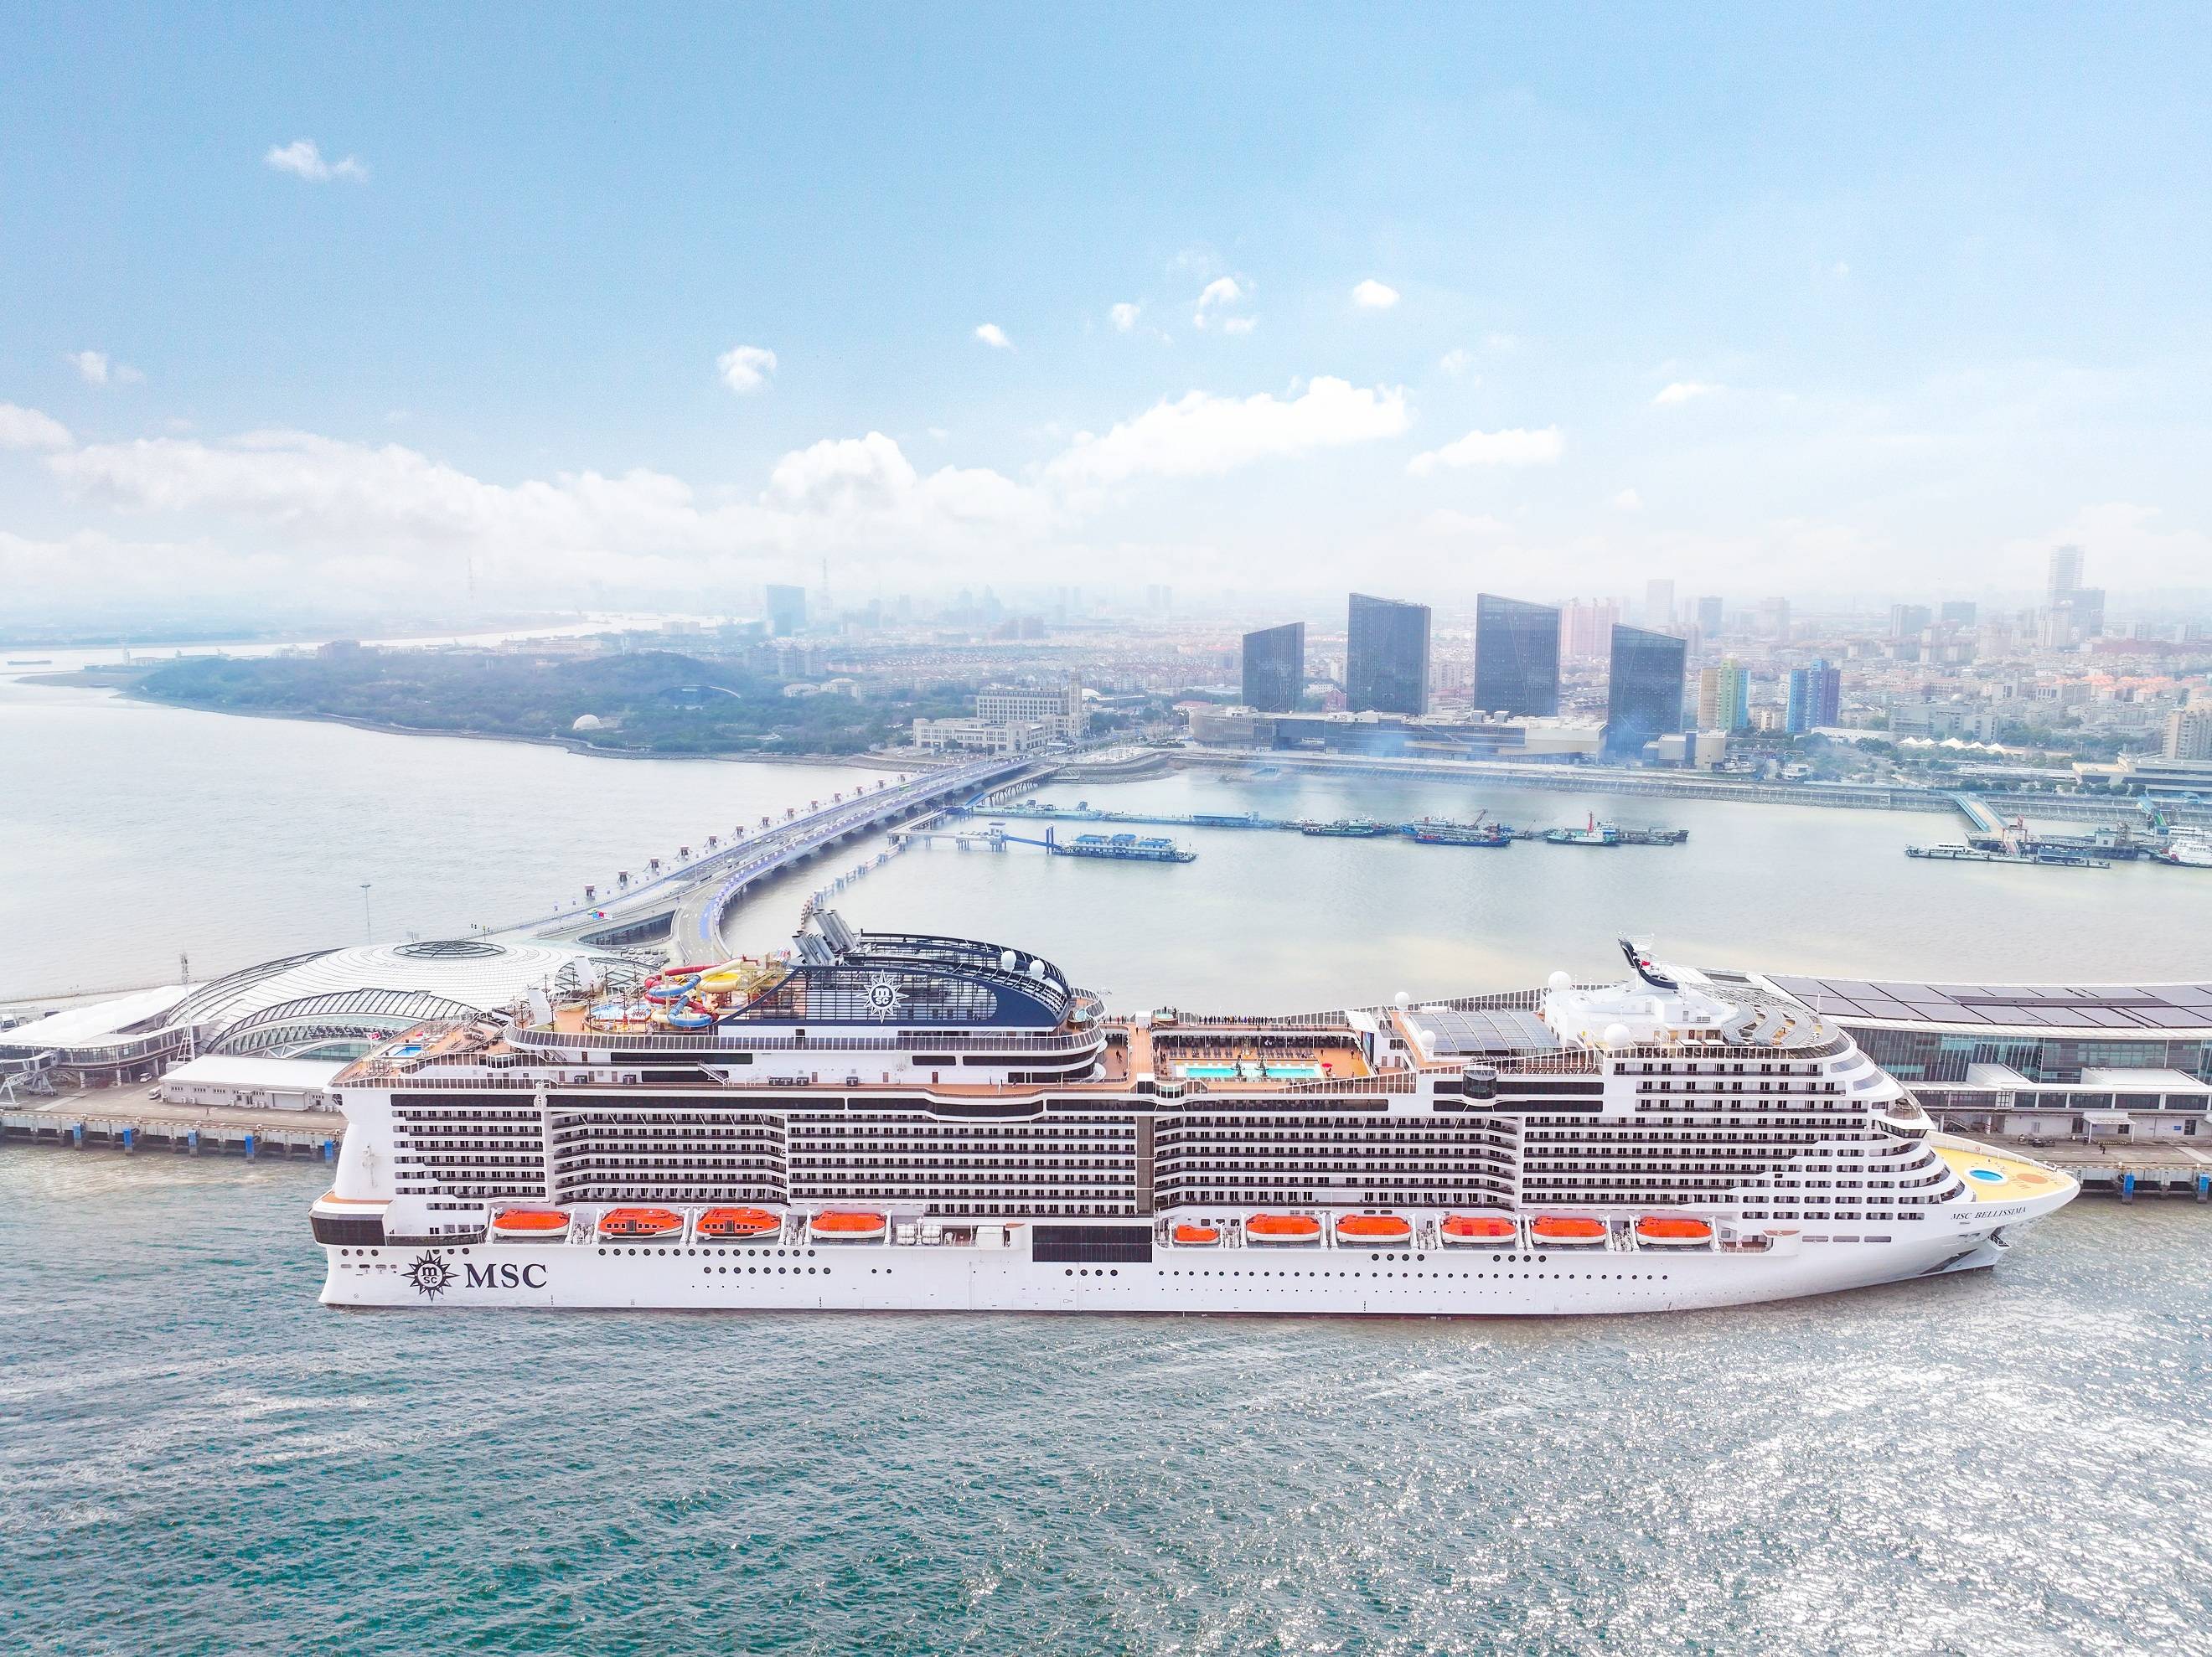 MSC地中海邮轮宣布“双船四母港”升级部署计划 “亚洲旗舰”MSC荣耀号3月16日从上海邮轮港开启中国大陆地区首